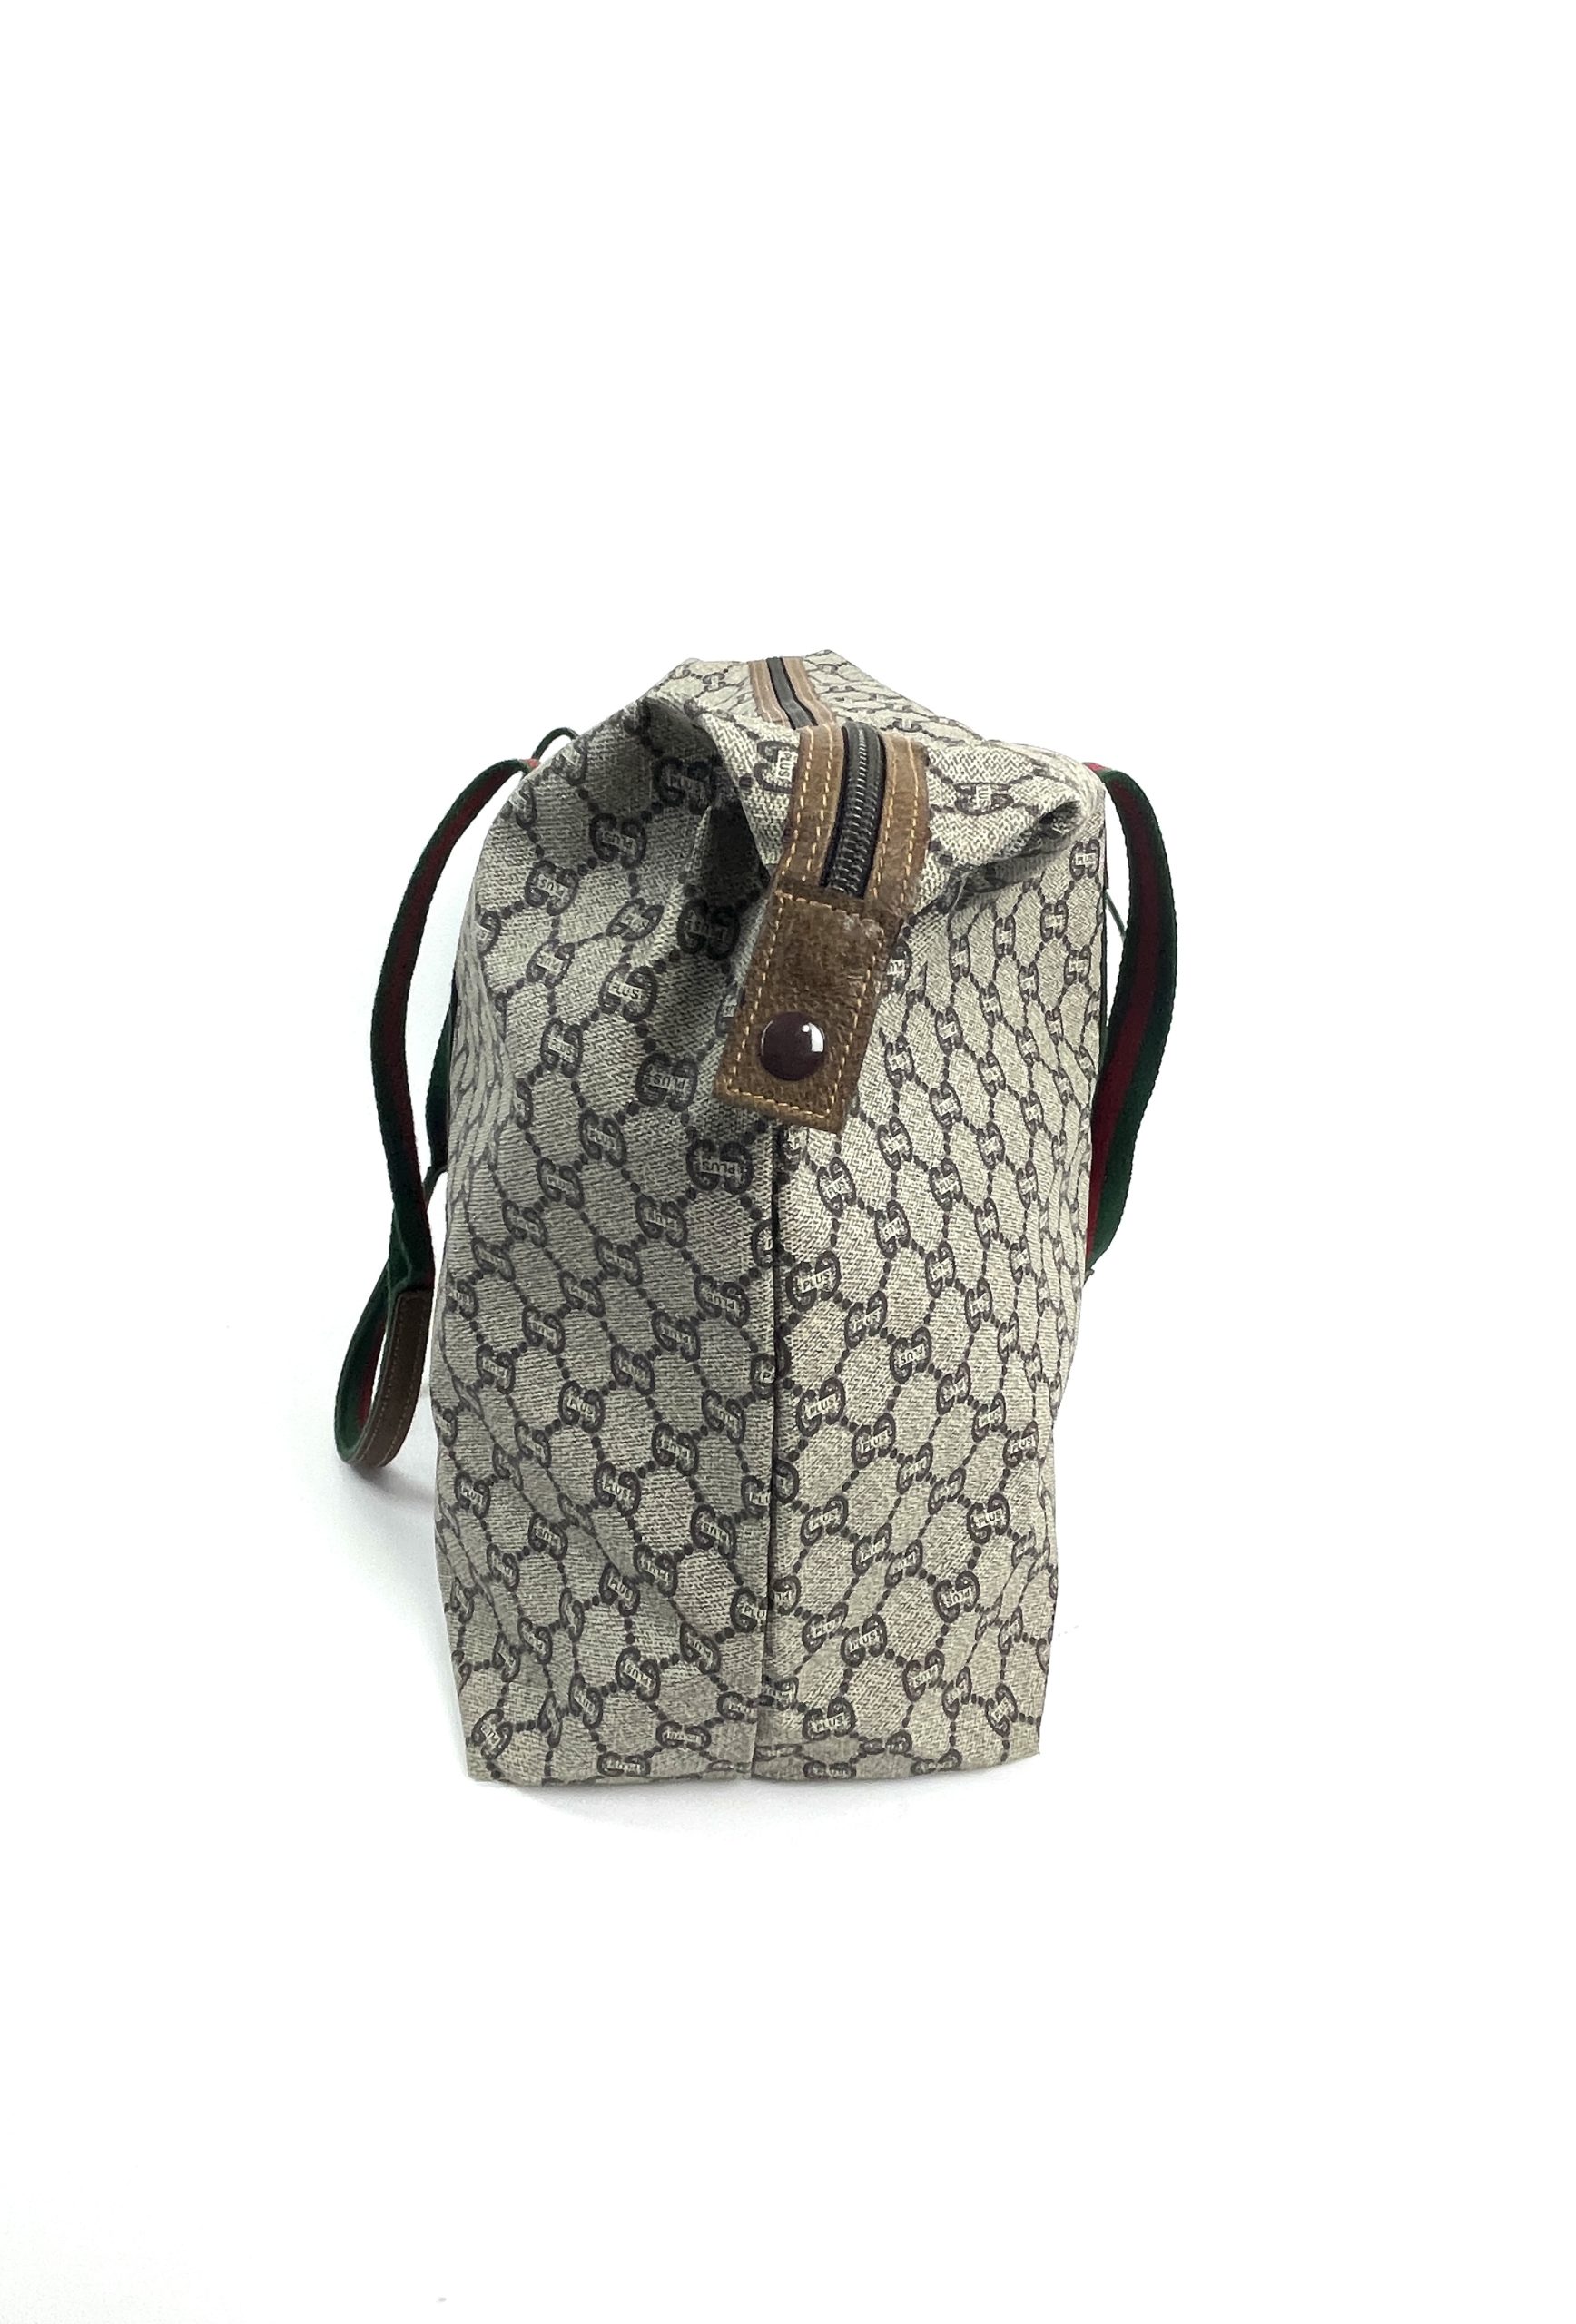 Gucci, Bags, Designer Bag Bundle Gucci Shoppingdust Bag Lv Shopping Bag